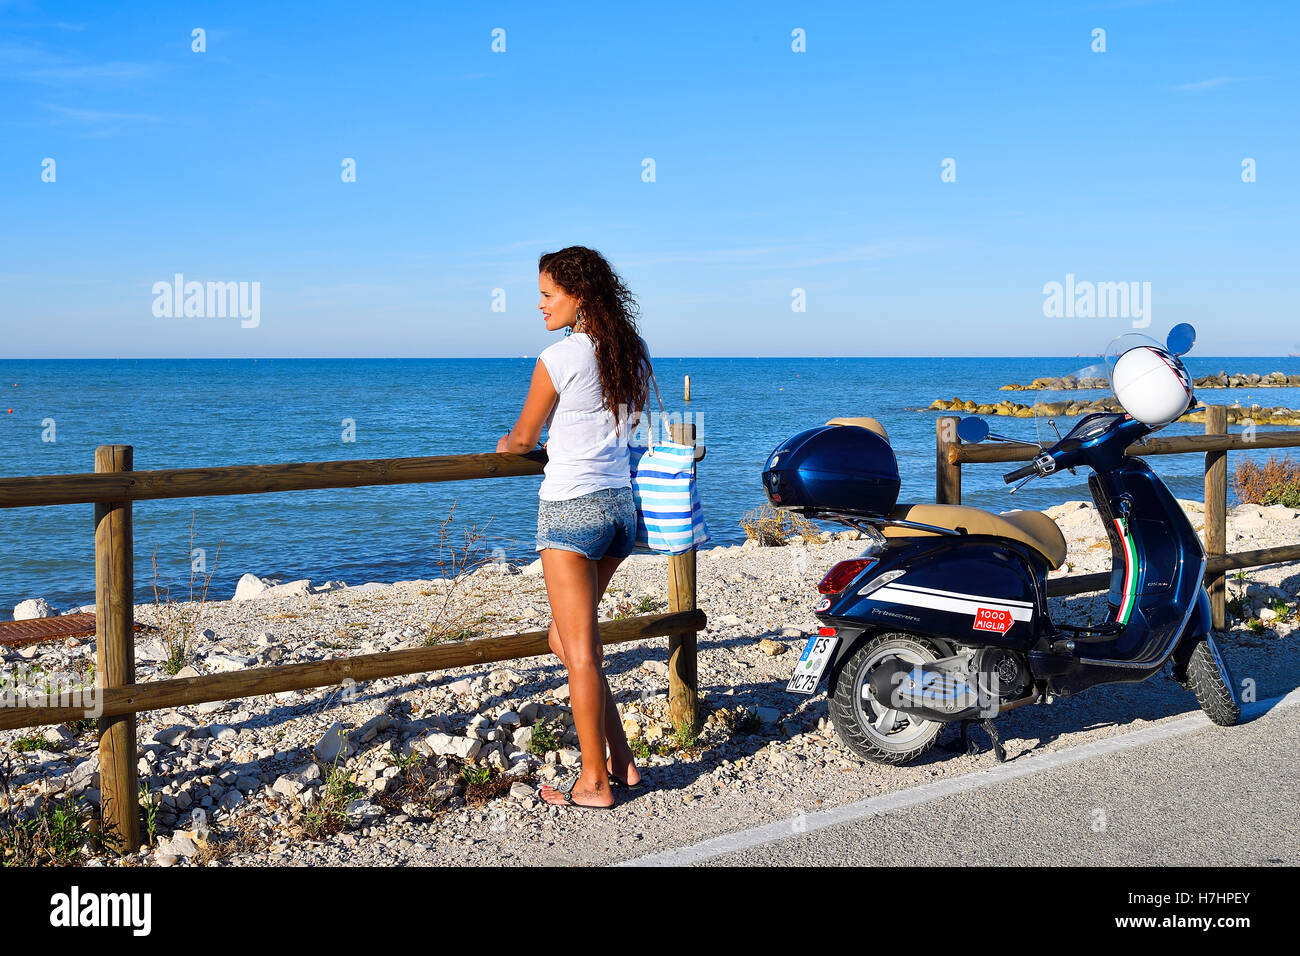 Woman gazing out at the sea next to Vespa Primavera scooter, Marina di Montemarciano, Indian, Alaska Marche, Italy Stock Photo